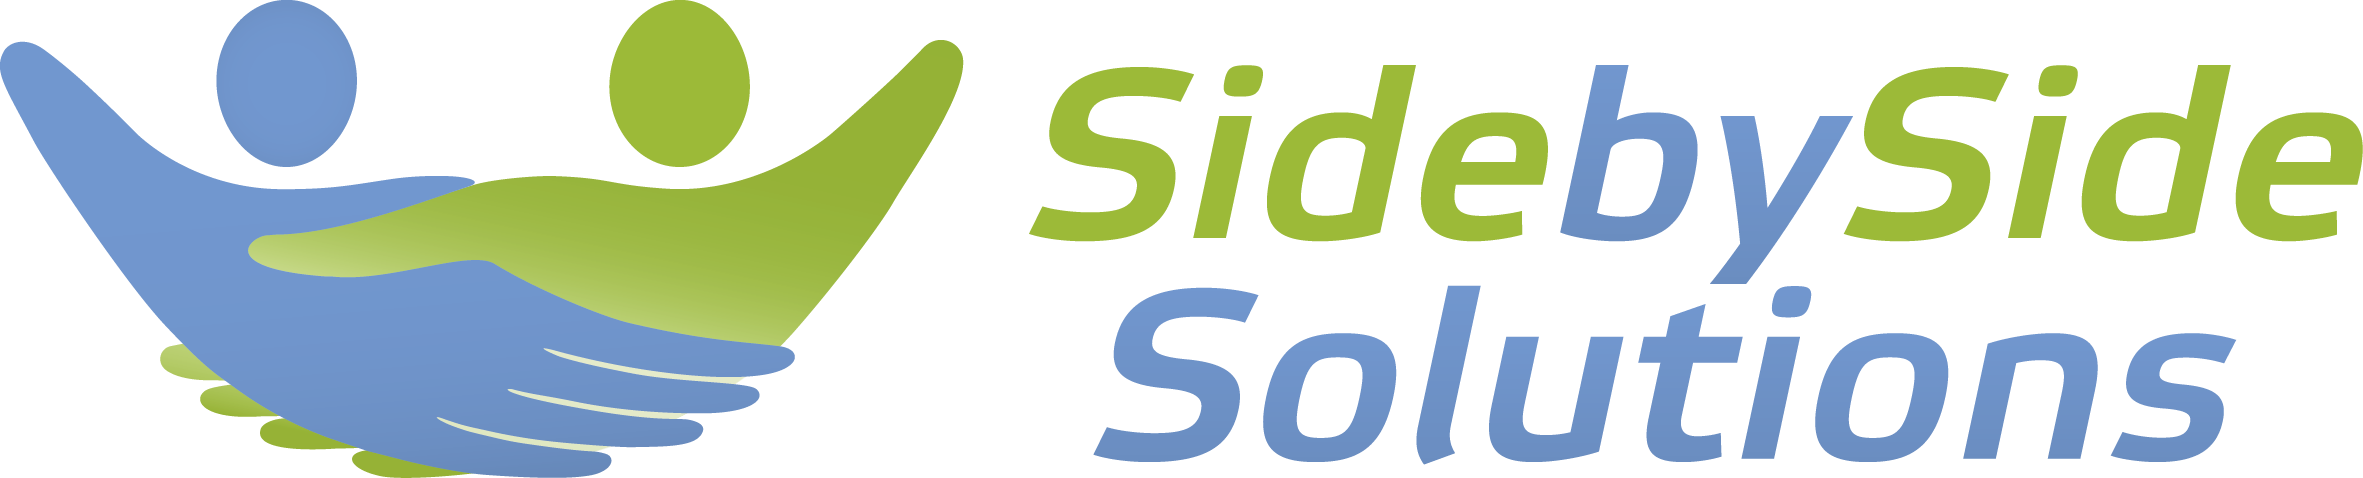 SidebySide Solutions